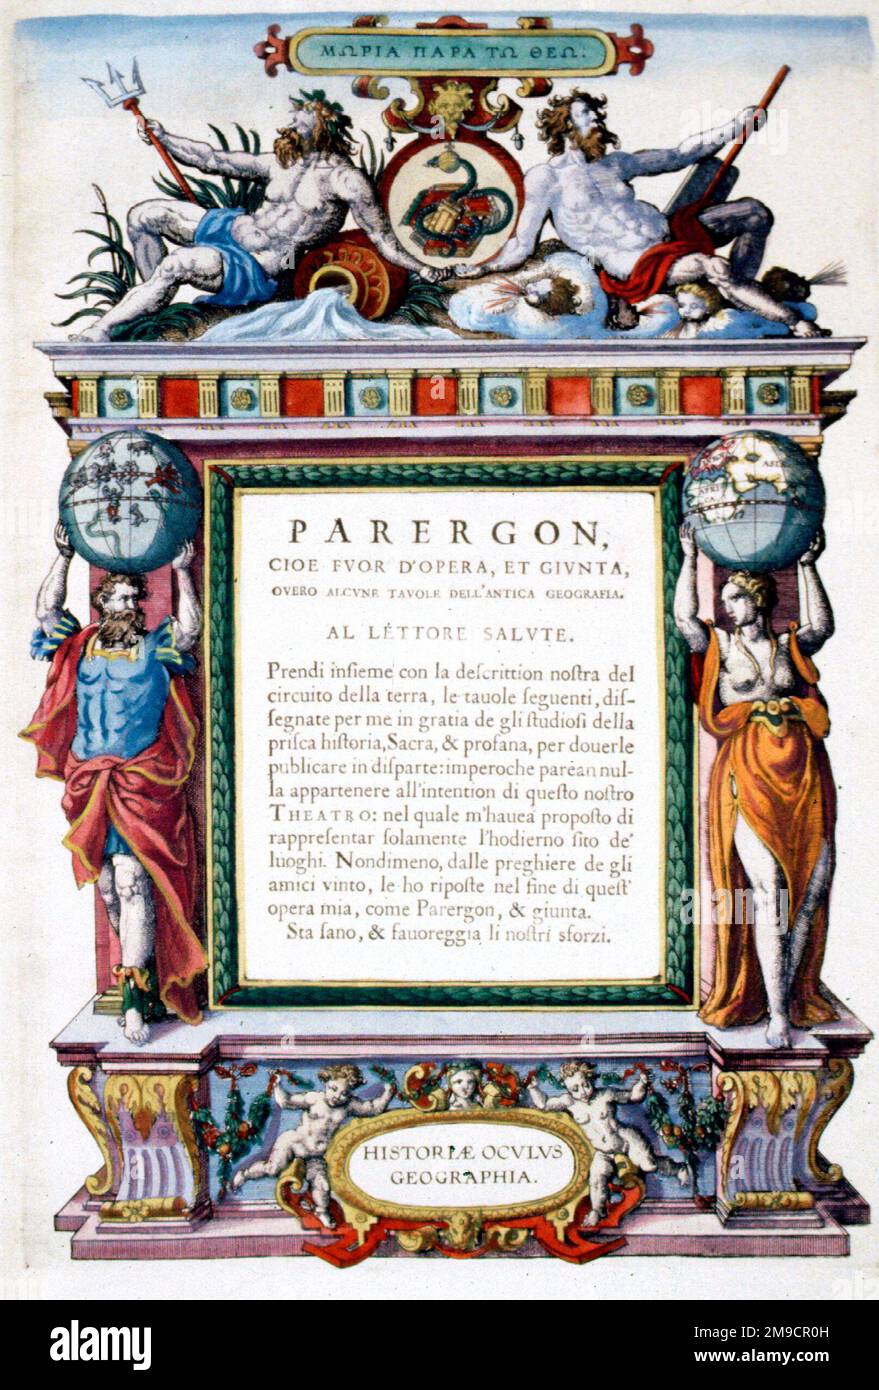 Parergon - Historiae Oculus Geographia Stock Photo